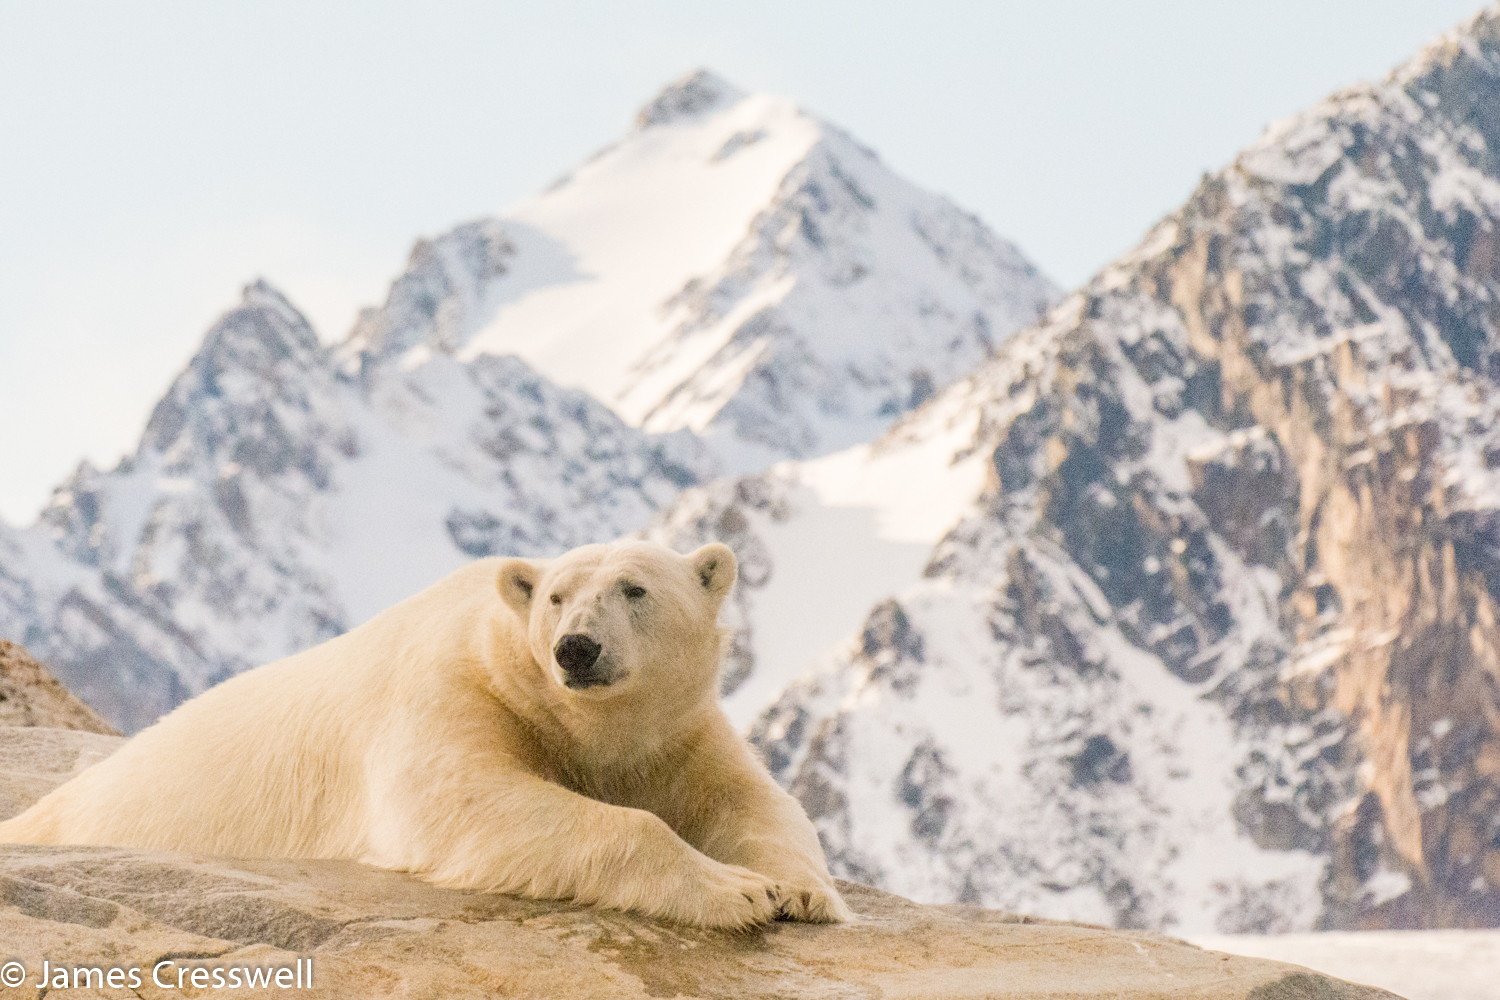 A photograph of a polar bear in Svalbard, taken on a PolarWorld Travel placed cruise